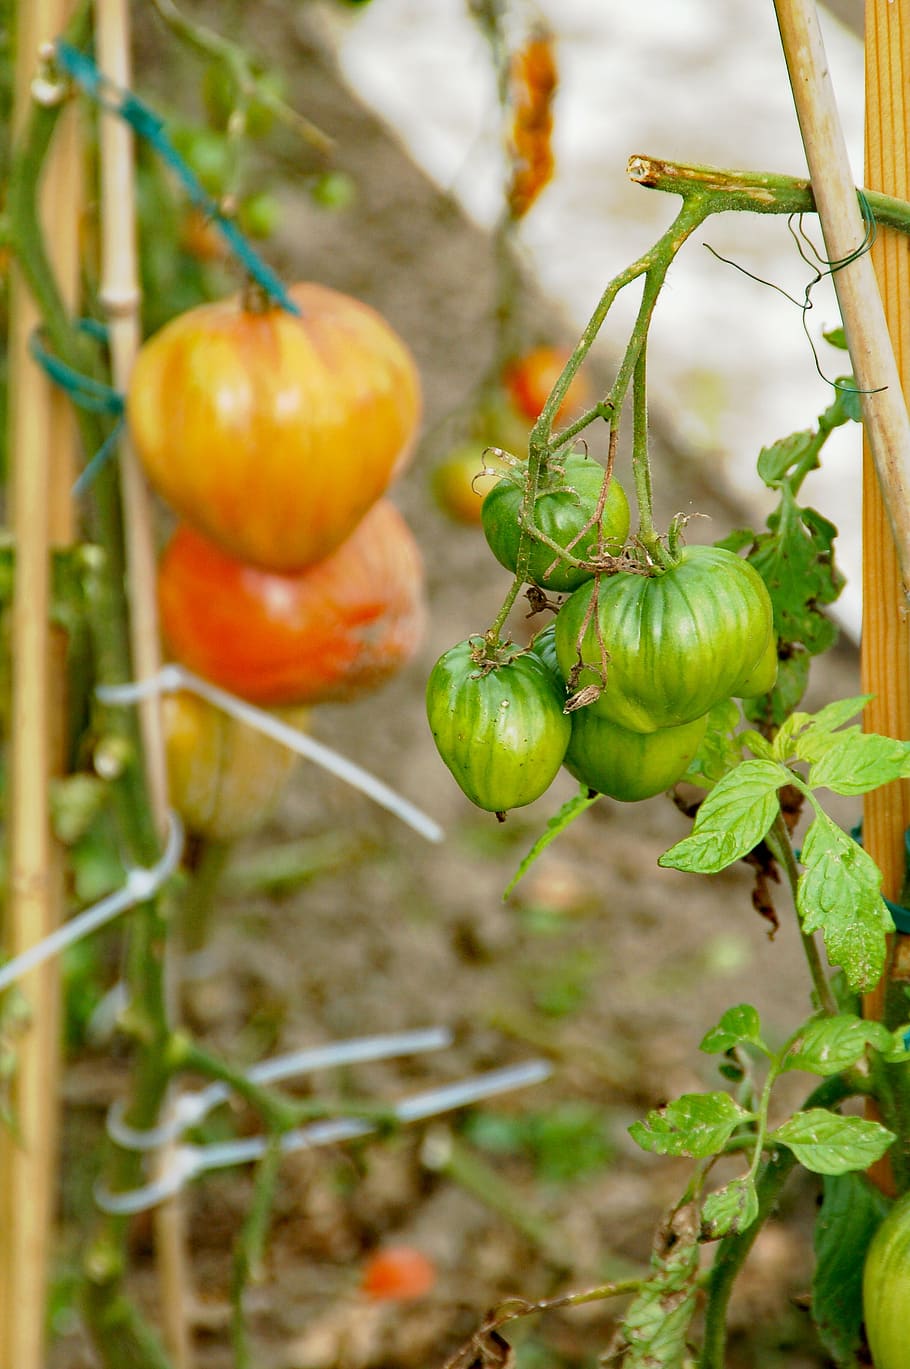 allotment, tomatoes, growth, development, green, red, garden, edit, mature, immature